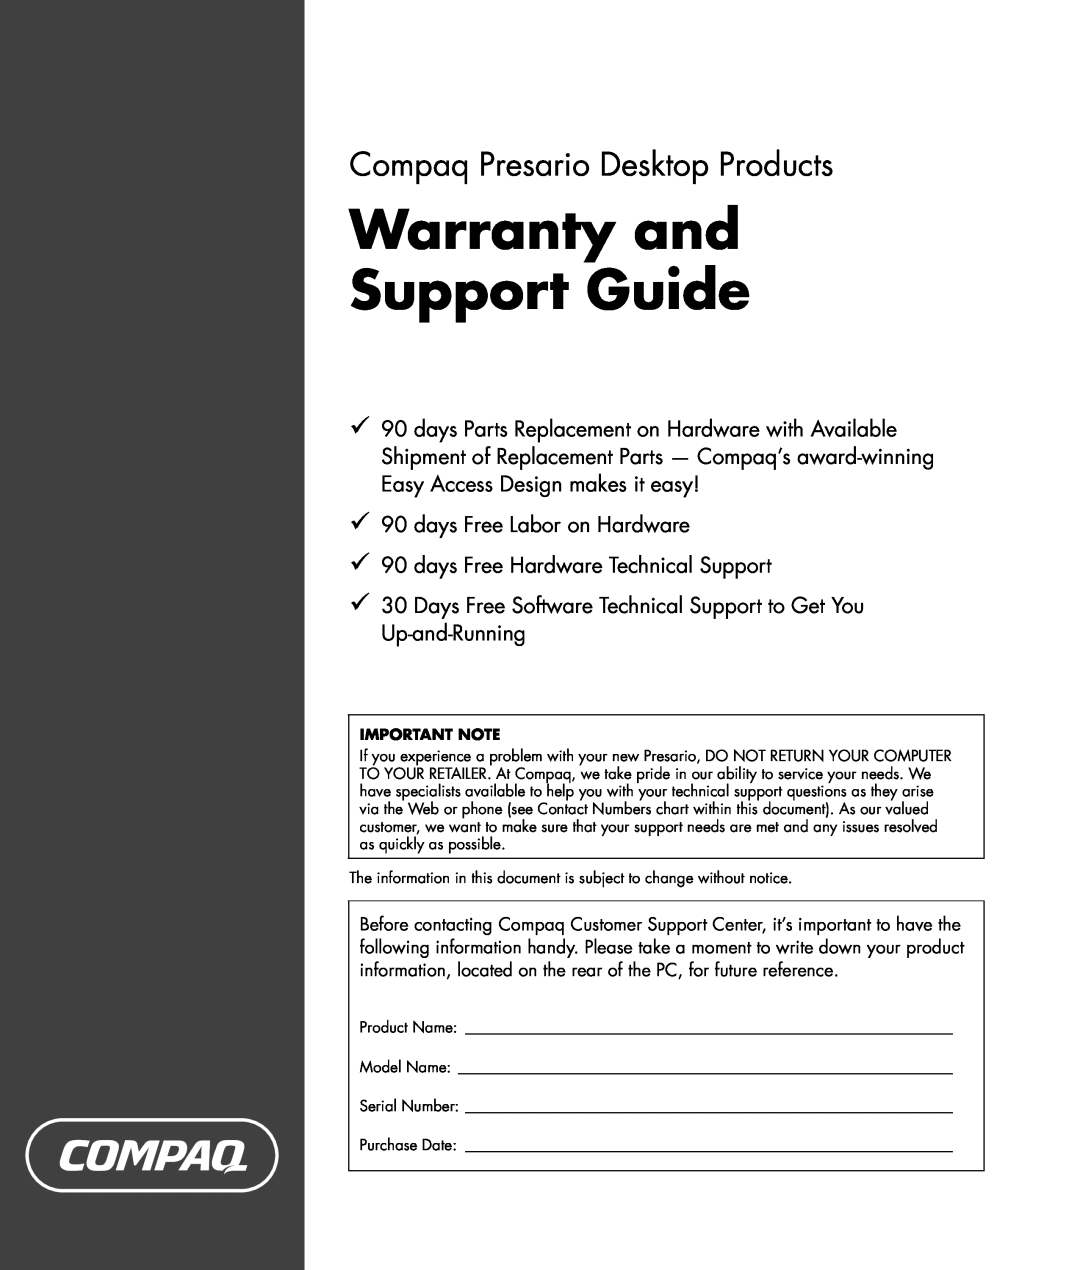 HP SR1300CF (PJ745AV) manual Warranty and Support Guide, Compaq Presario Desktop Products, days Free Labor on Hardware 